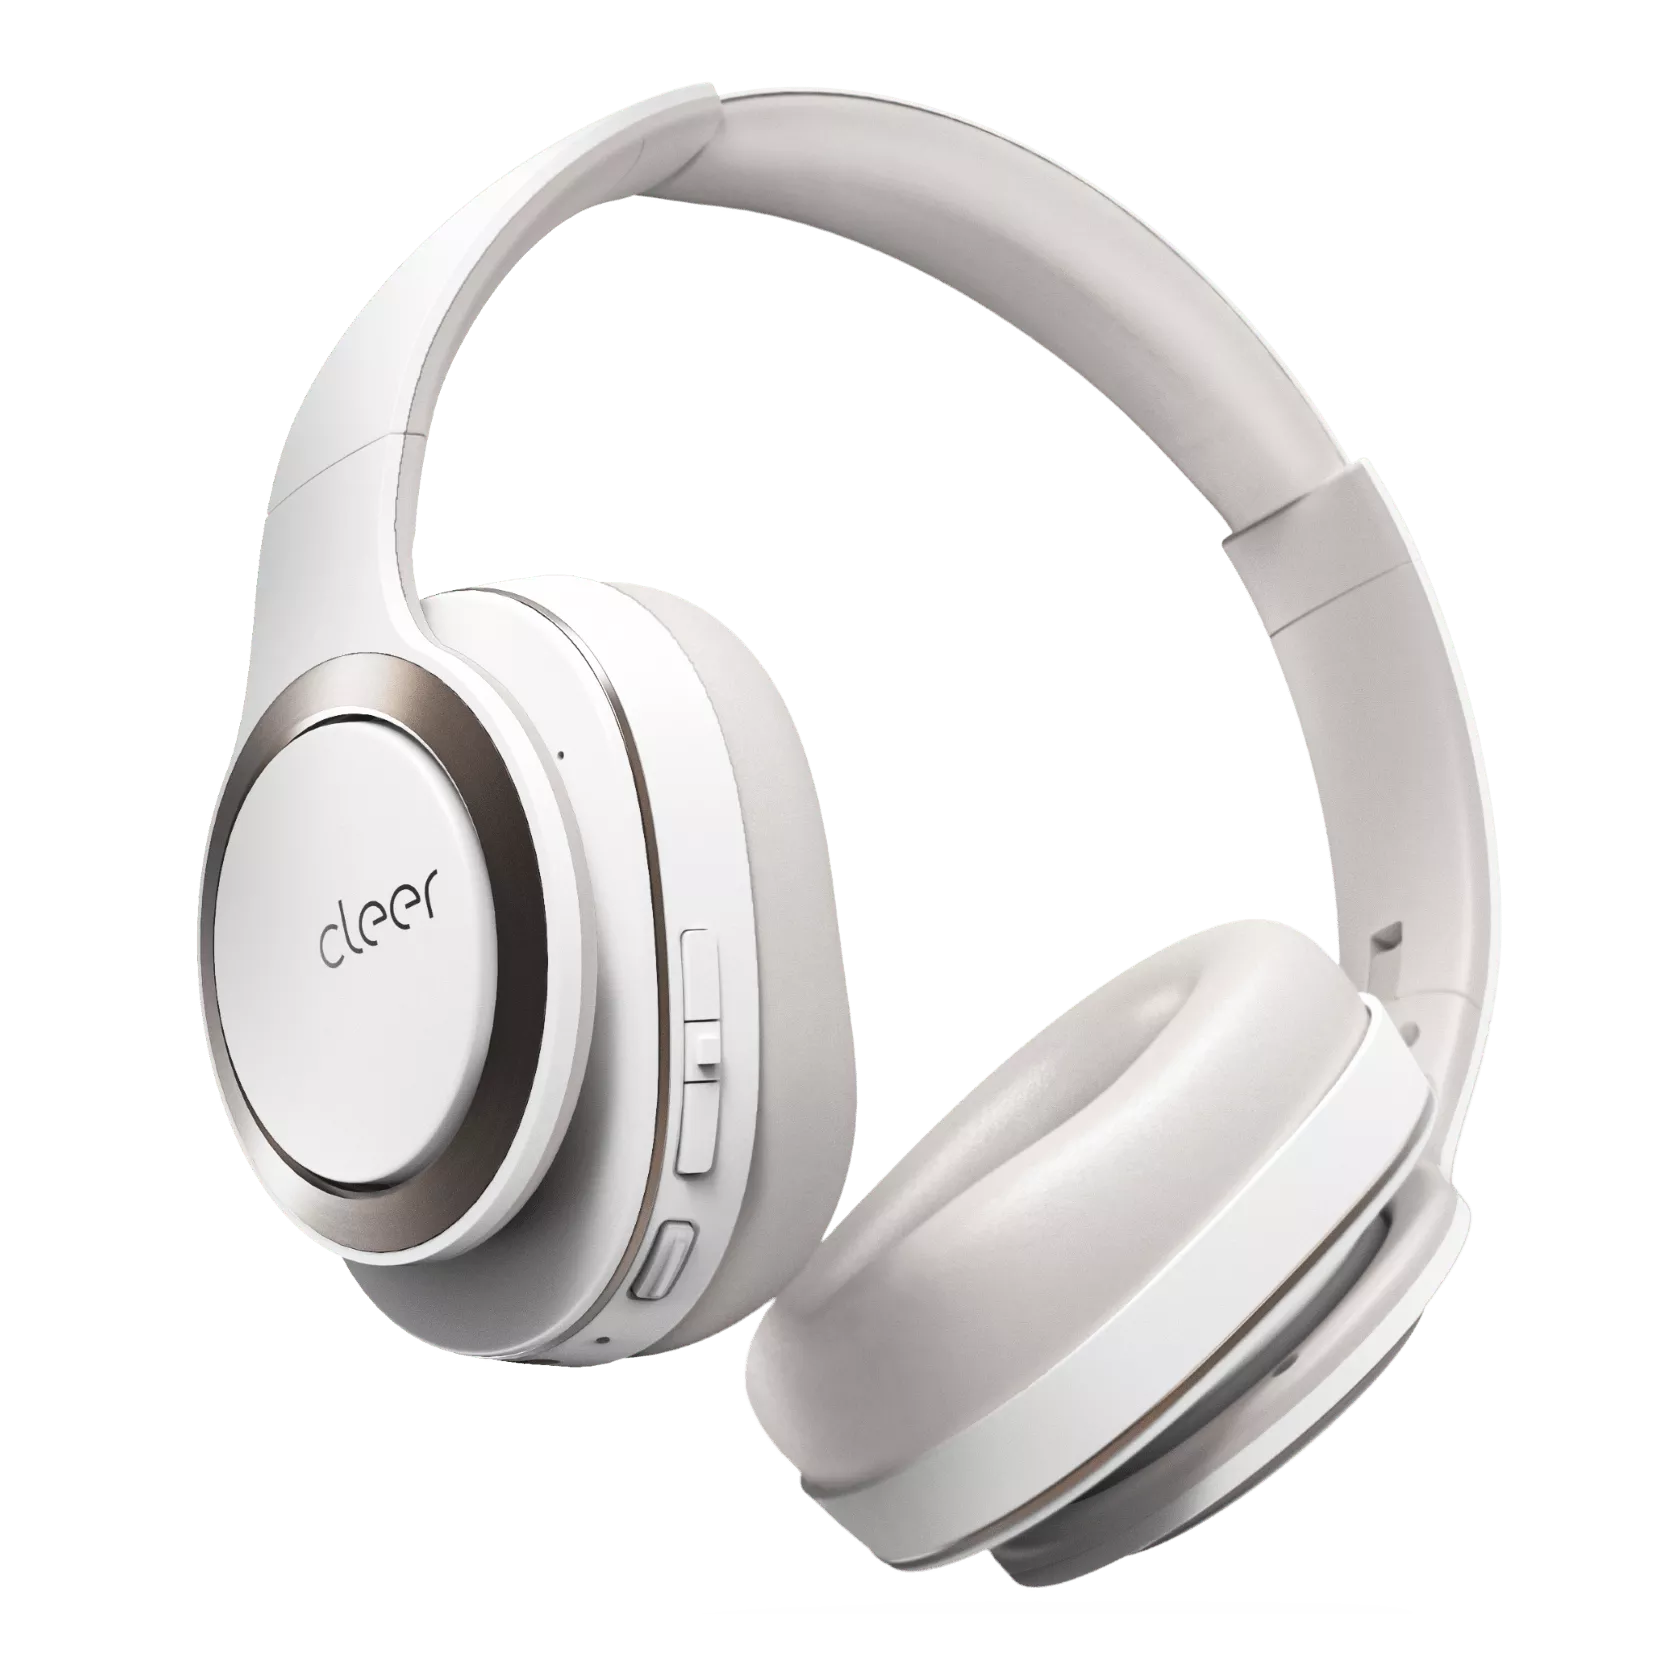 Cleer Enduro ANC - Active Noise Cancelling Wireless Headphones